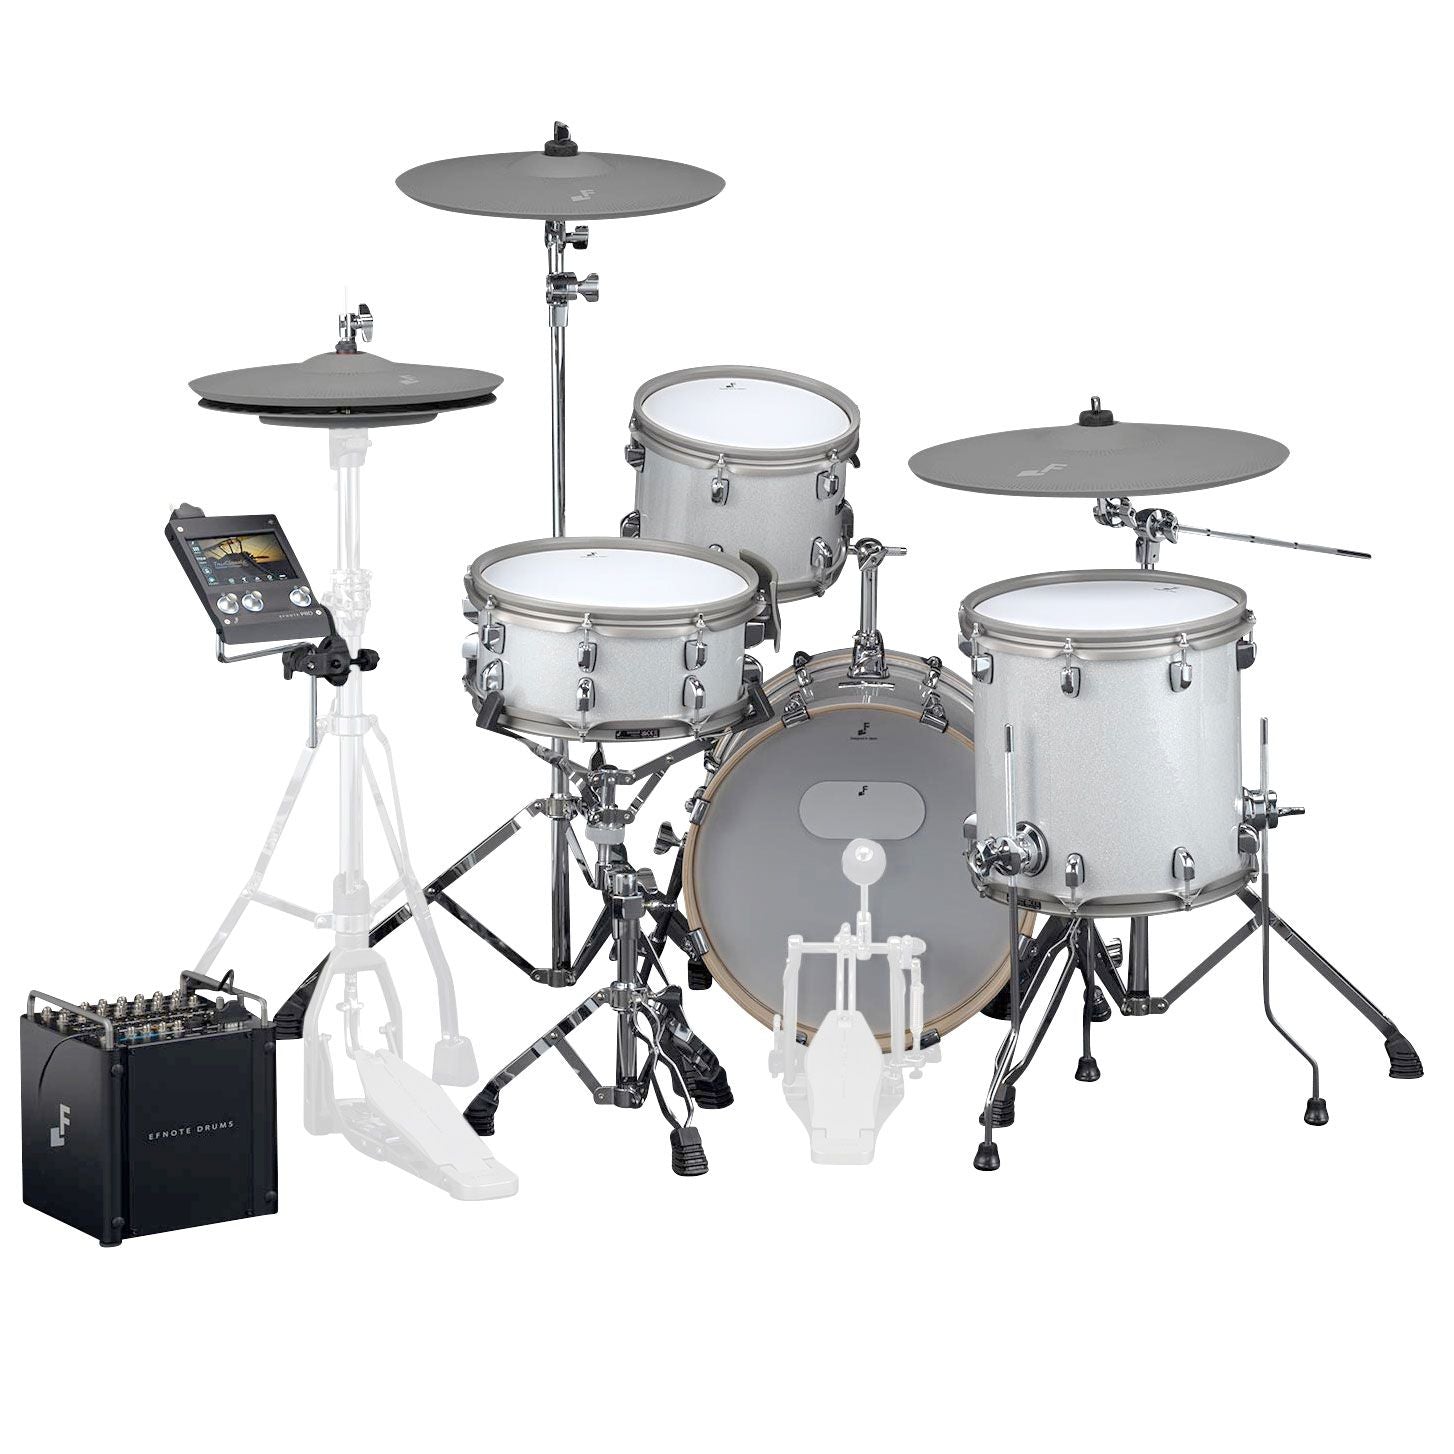 EFNOTE PRO 500 Electronic Drum Kit